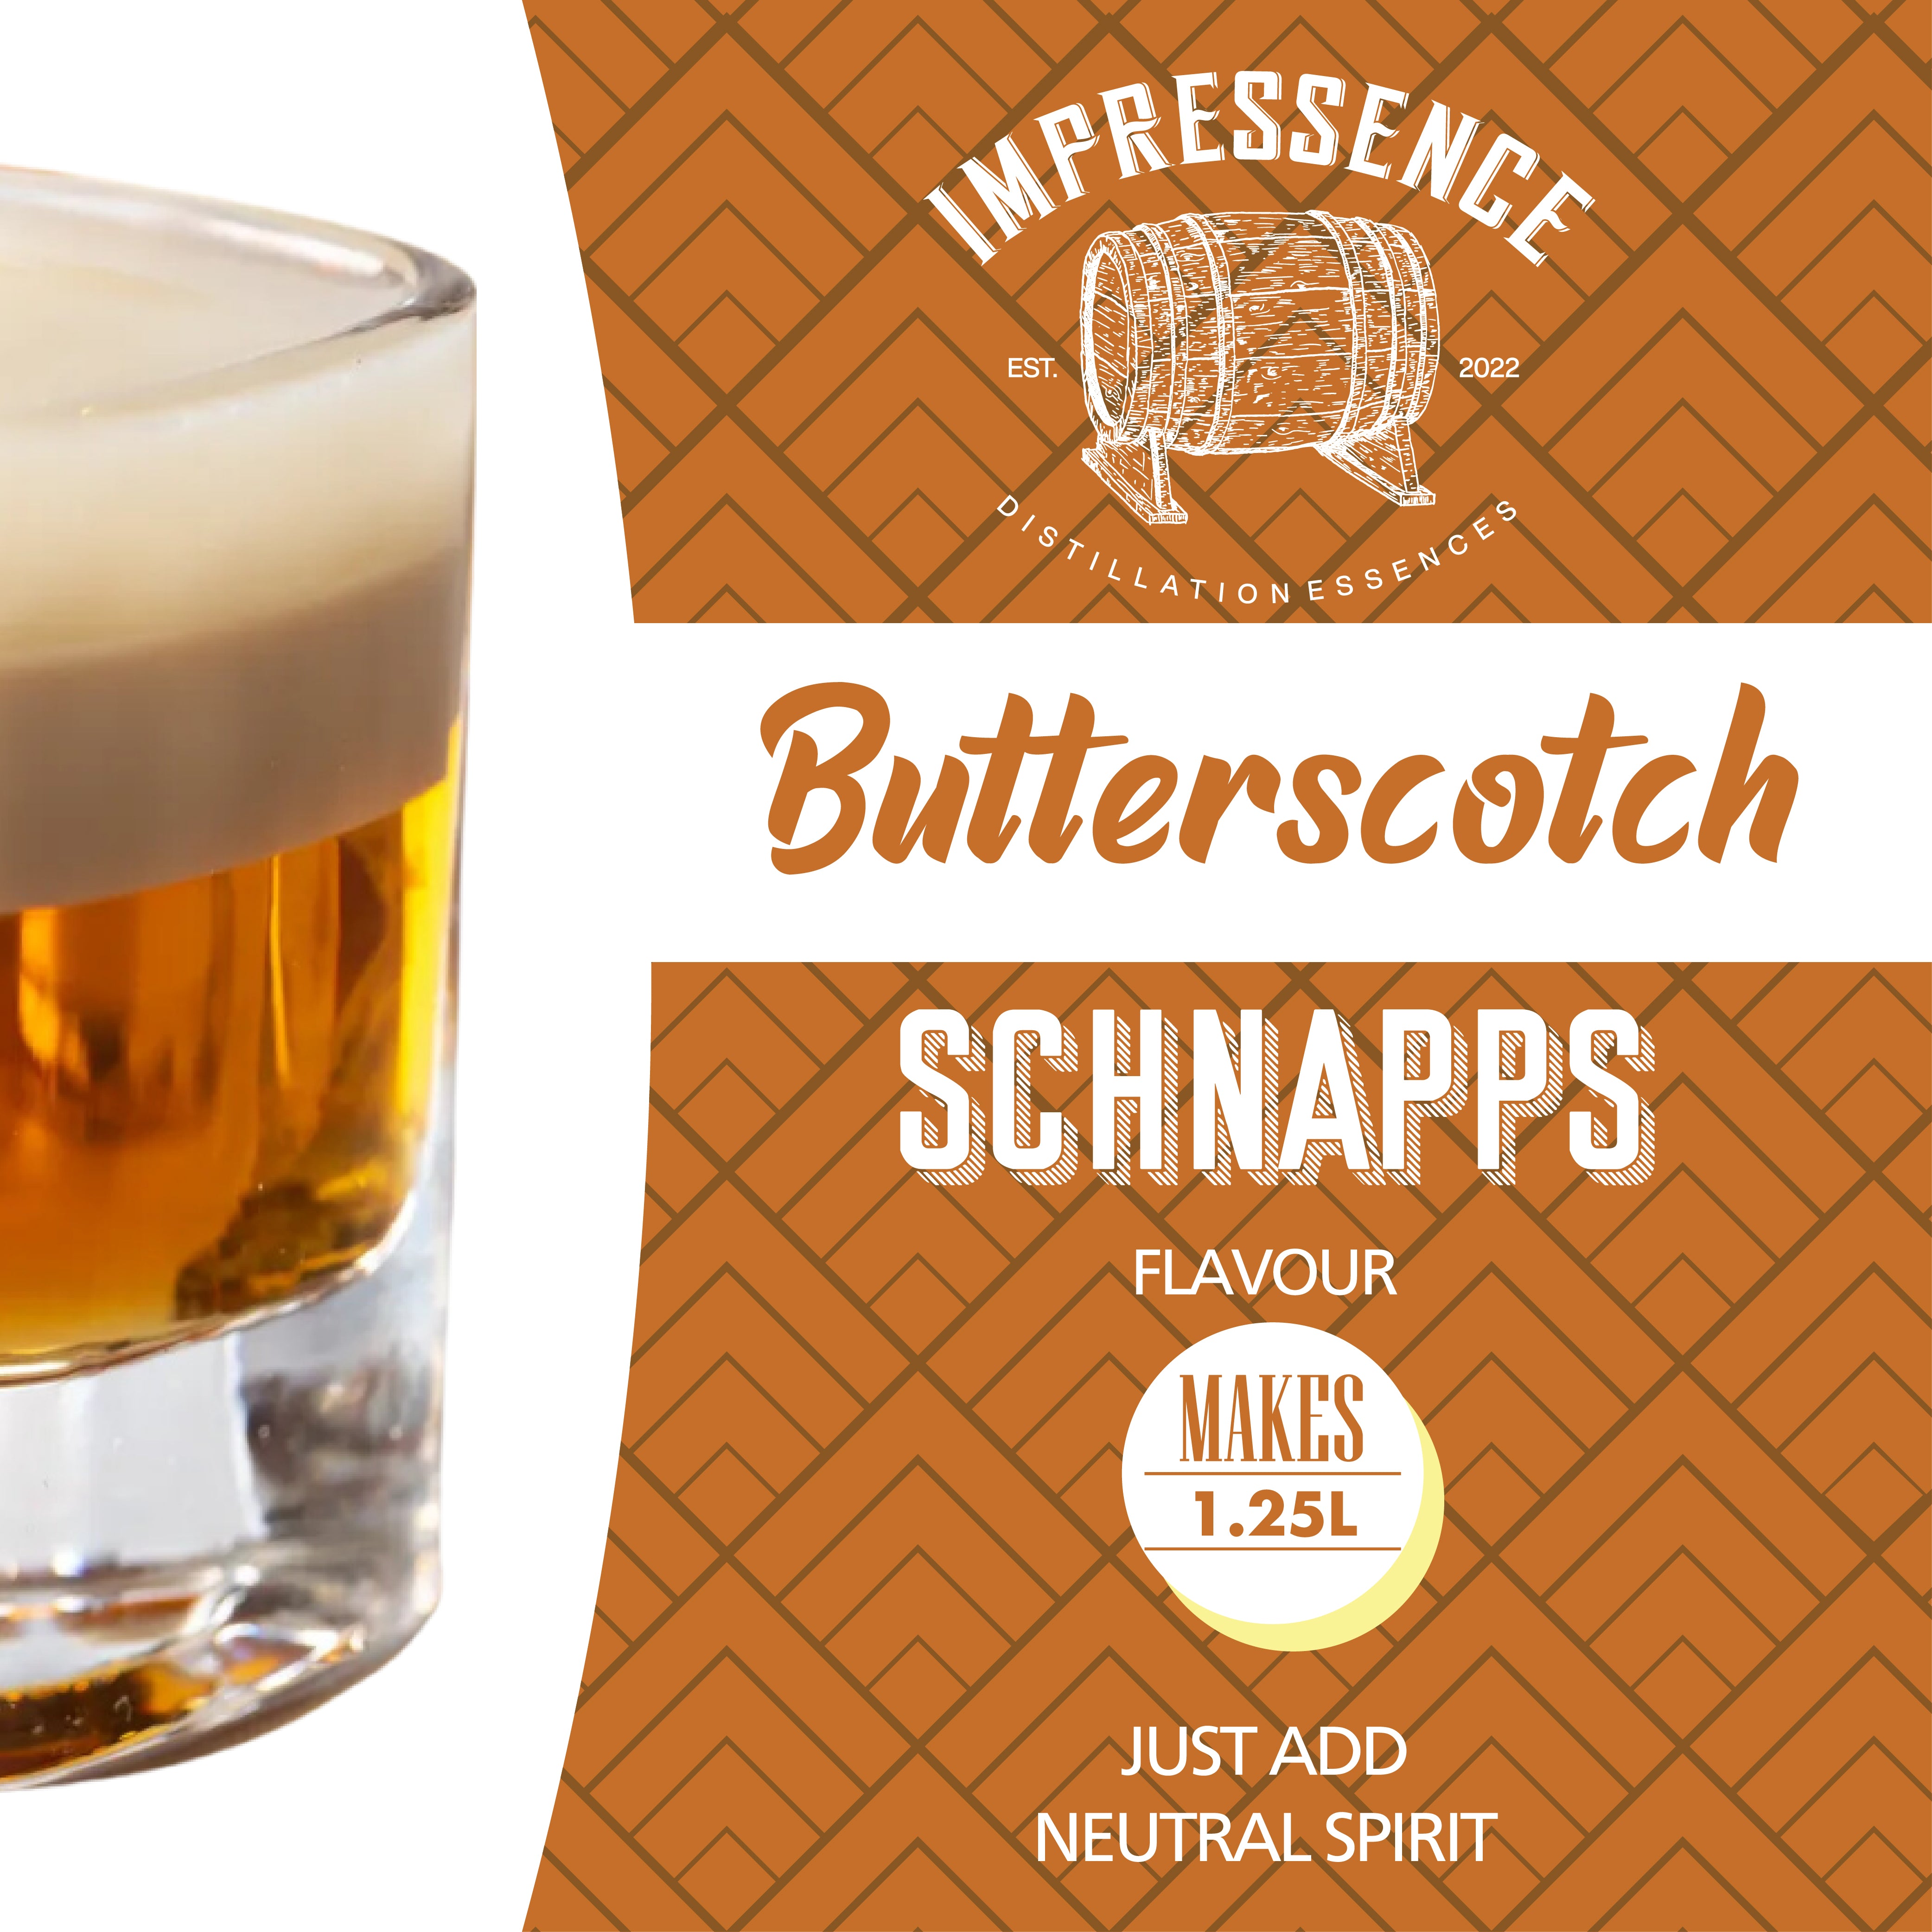 Impressence Butterscotch Schnapps Spirit Flavouring - Makes 1.25L of rich and velvety butterscotch liqueur.